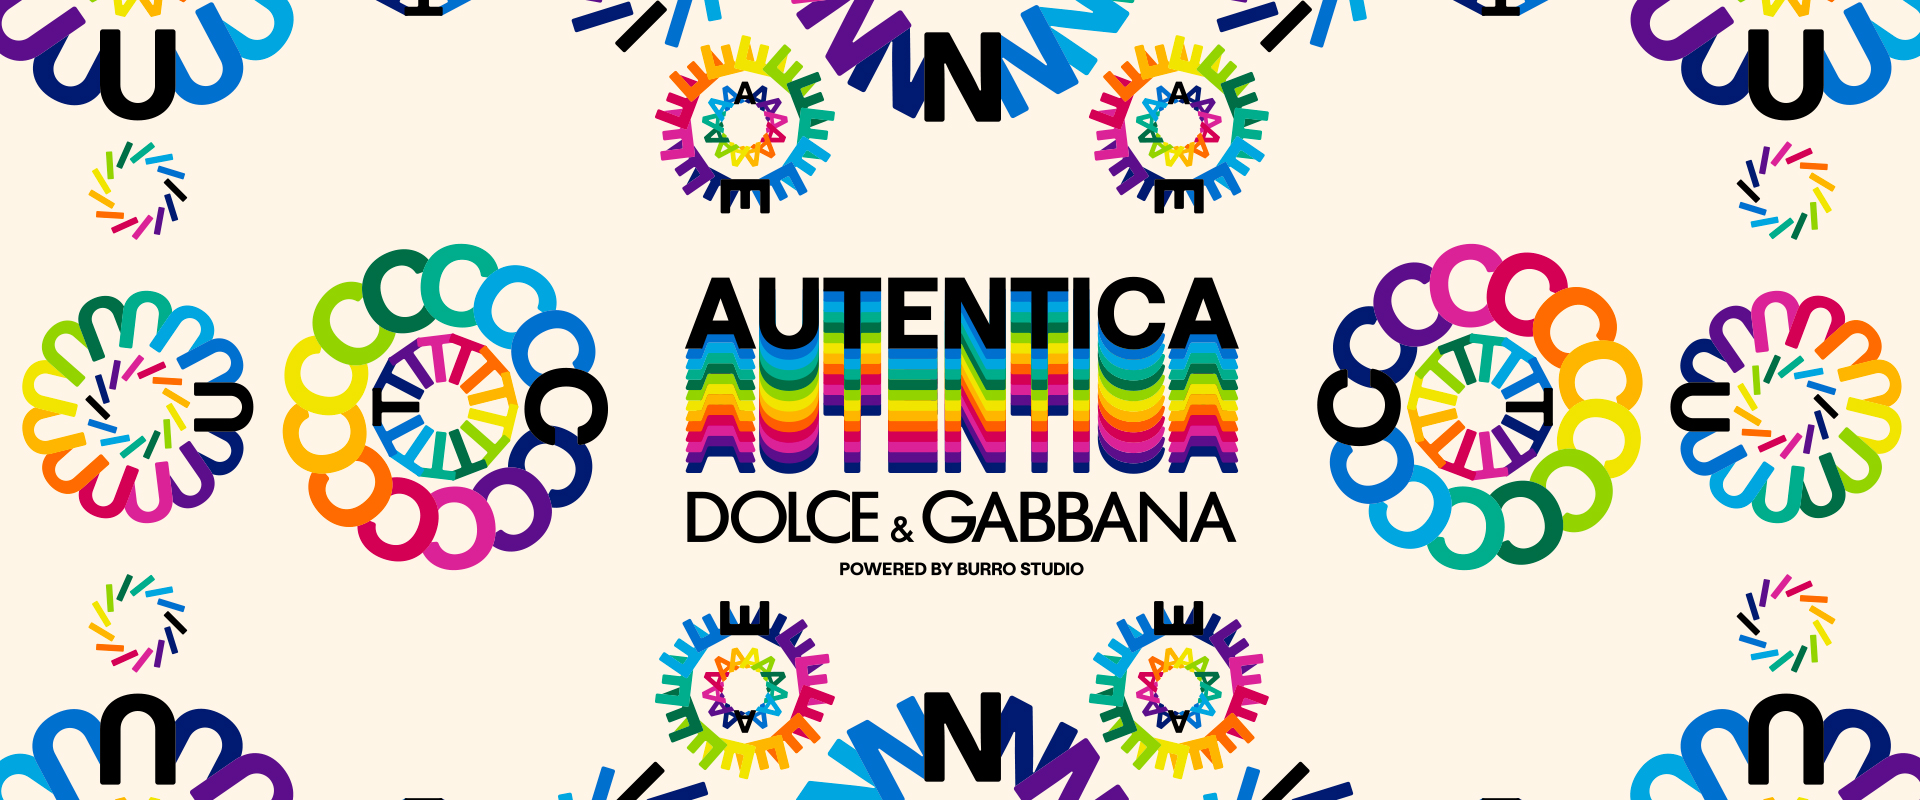 dolce-and-gabbana-autentica-top-banner-desktop-5